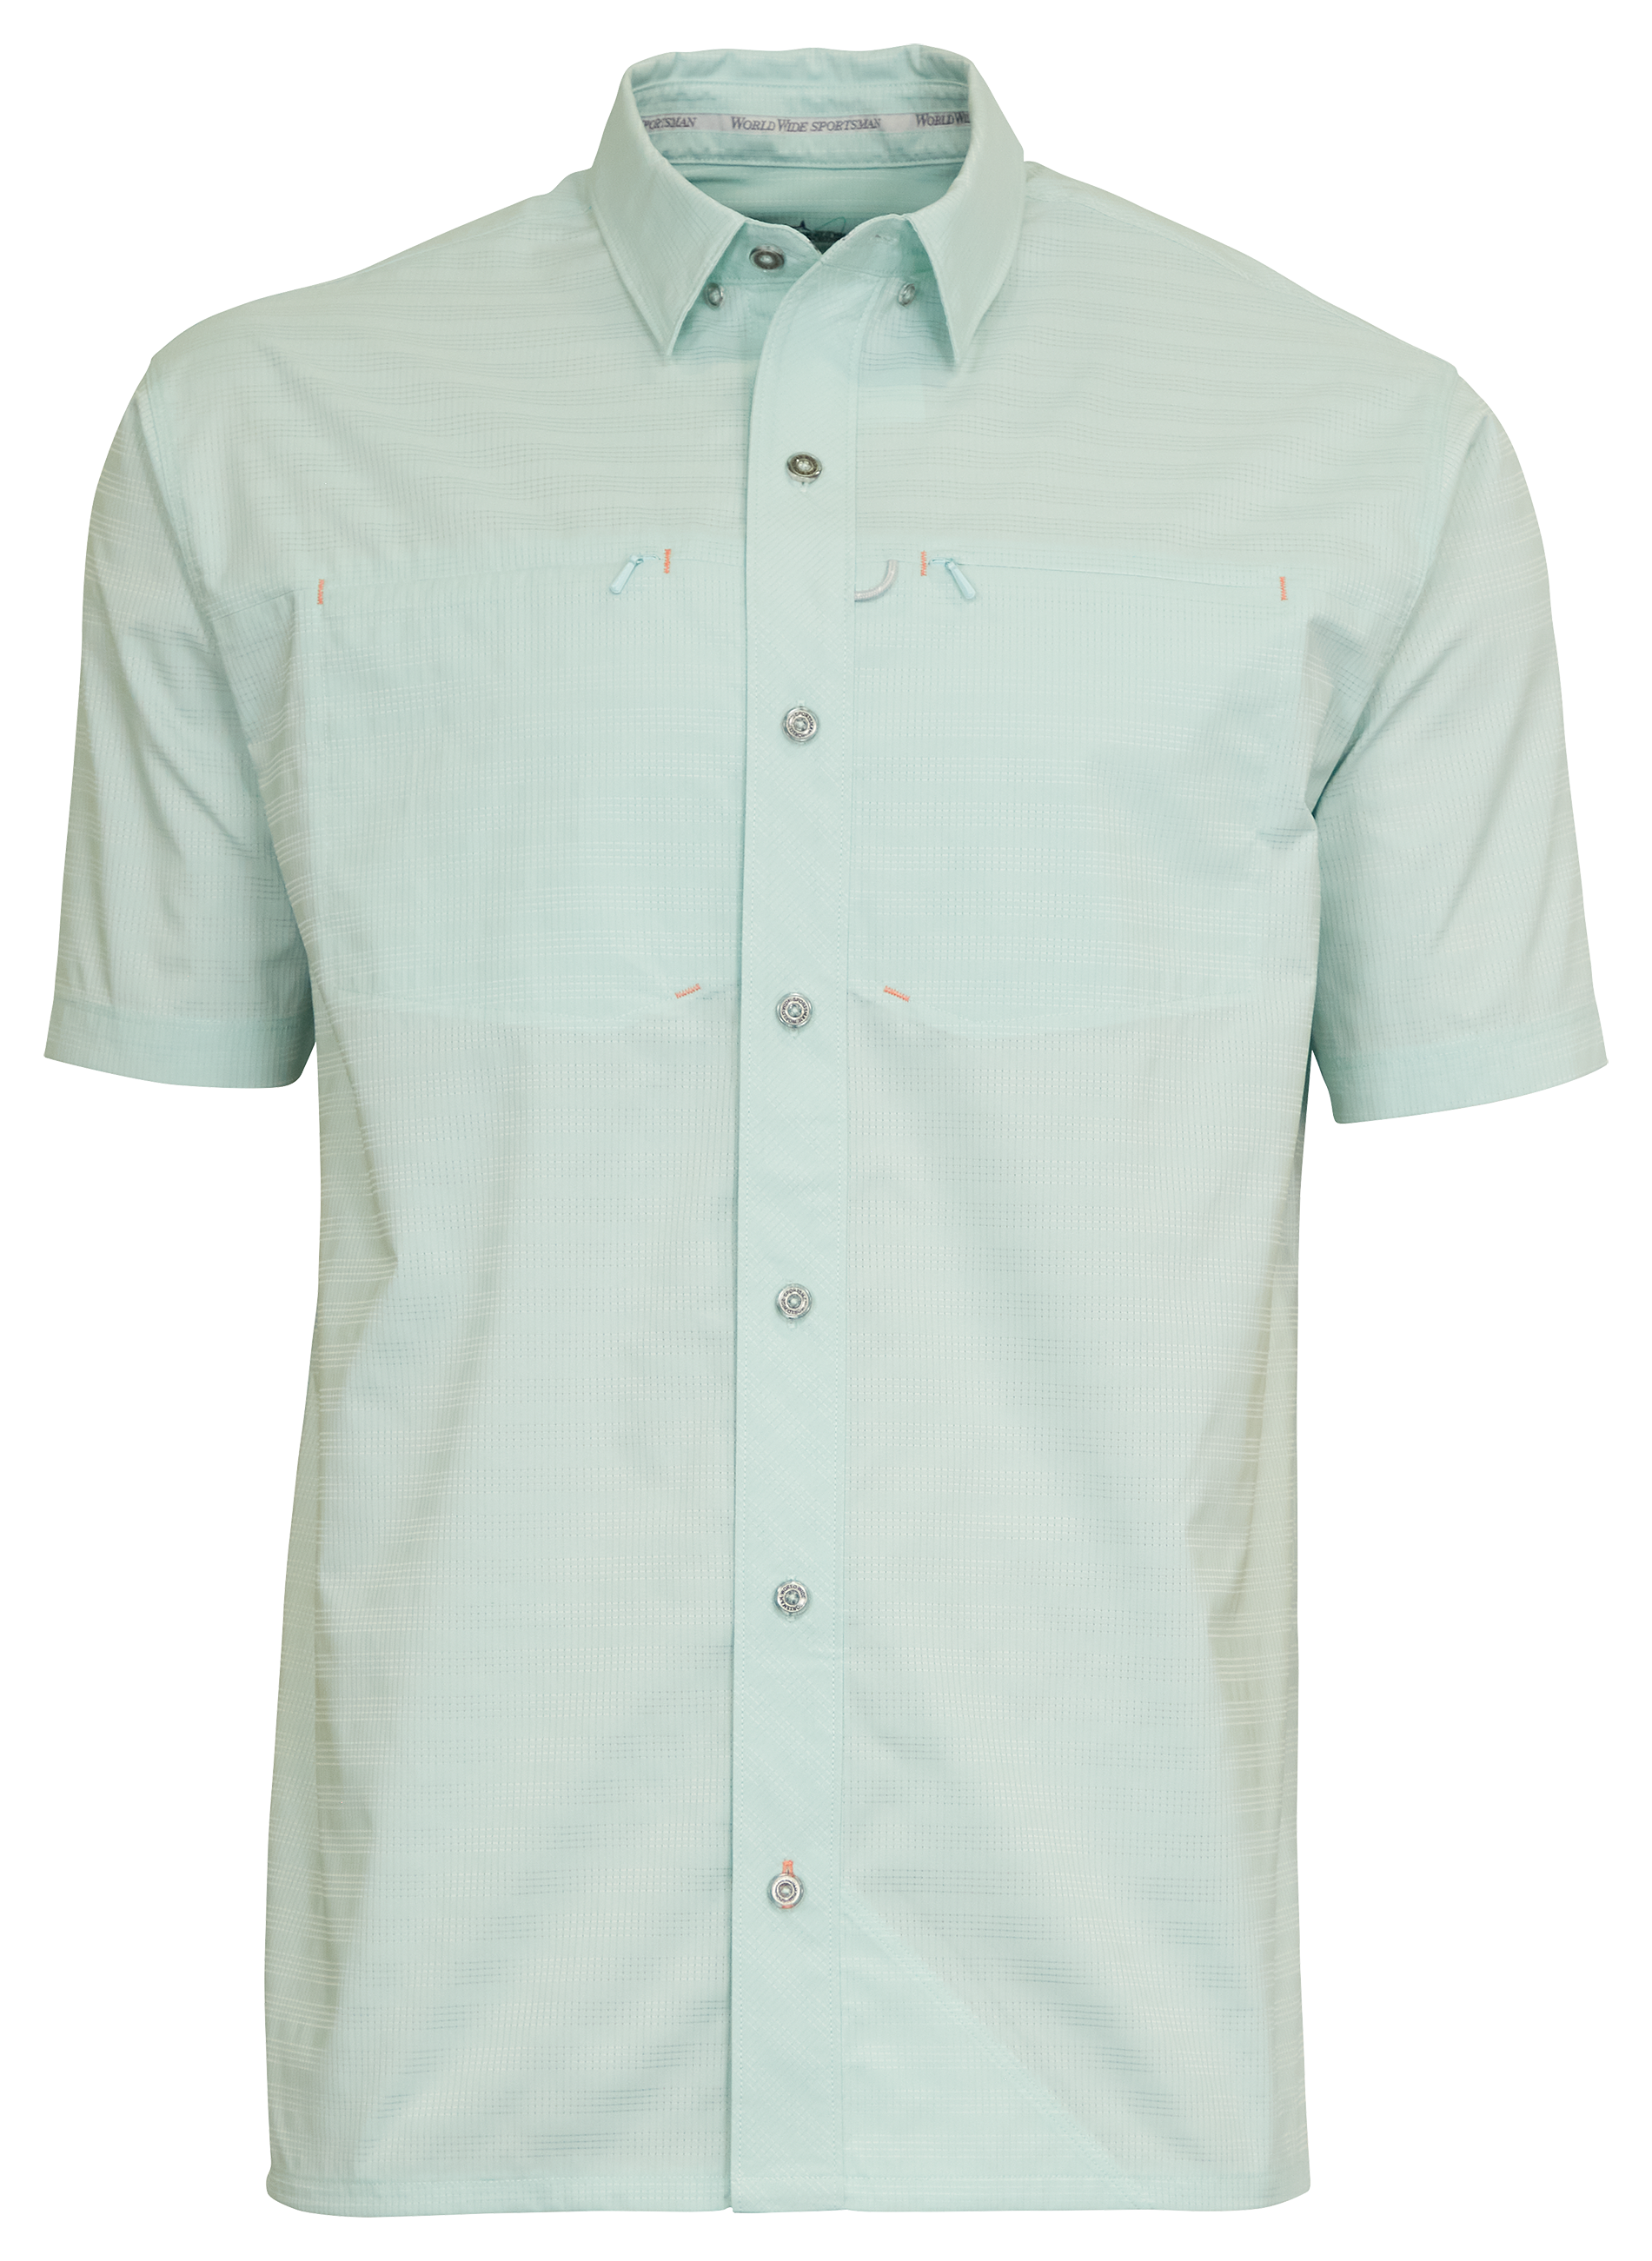 World Wide Sportsman Seacrest 2-Pocket Short-Sleeve Button-Down Shirt for Men - Harbor Gray - L